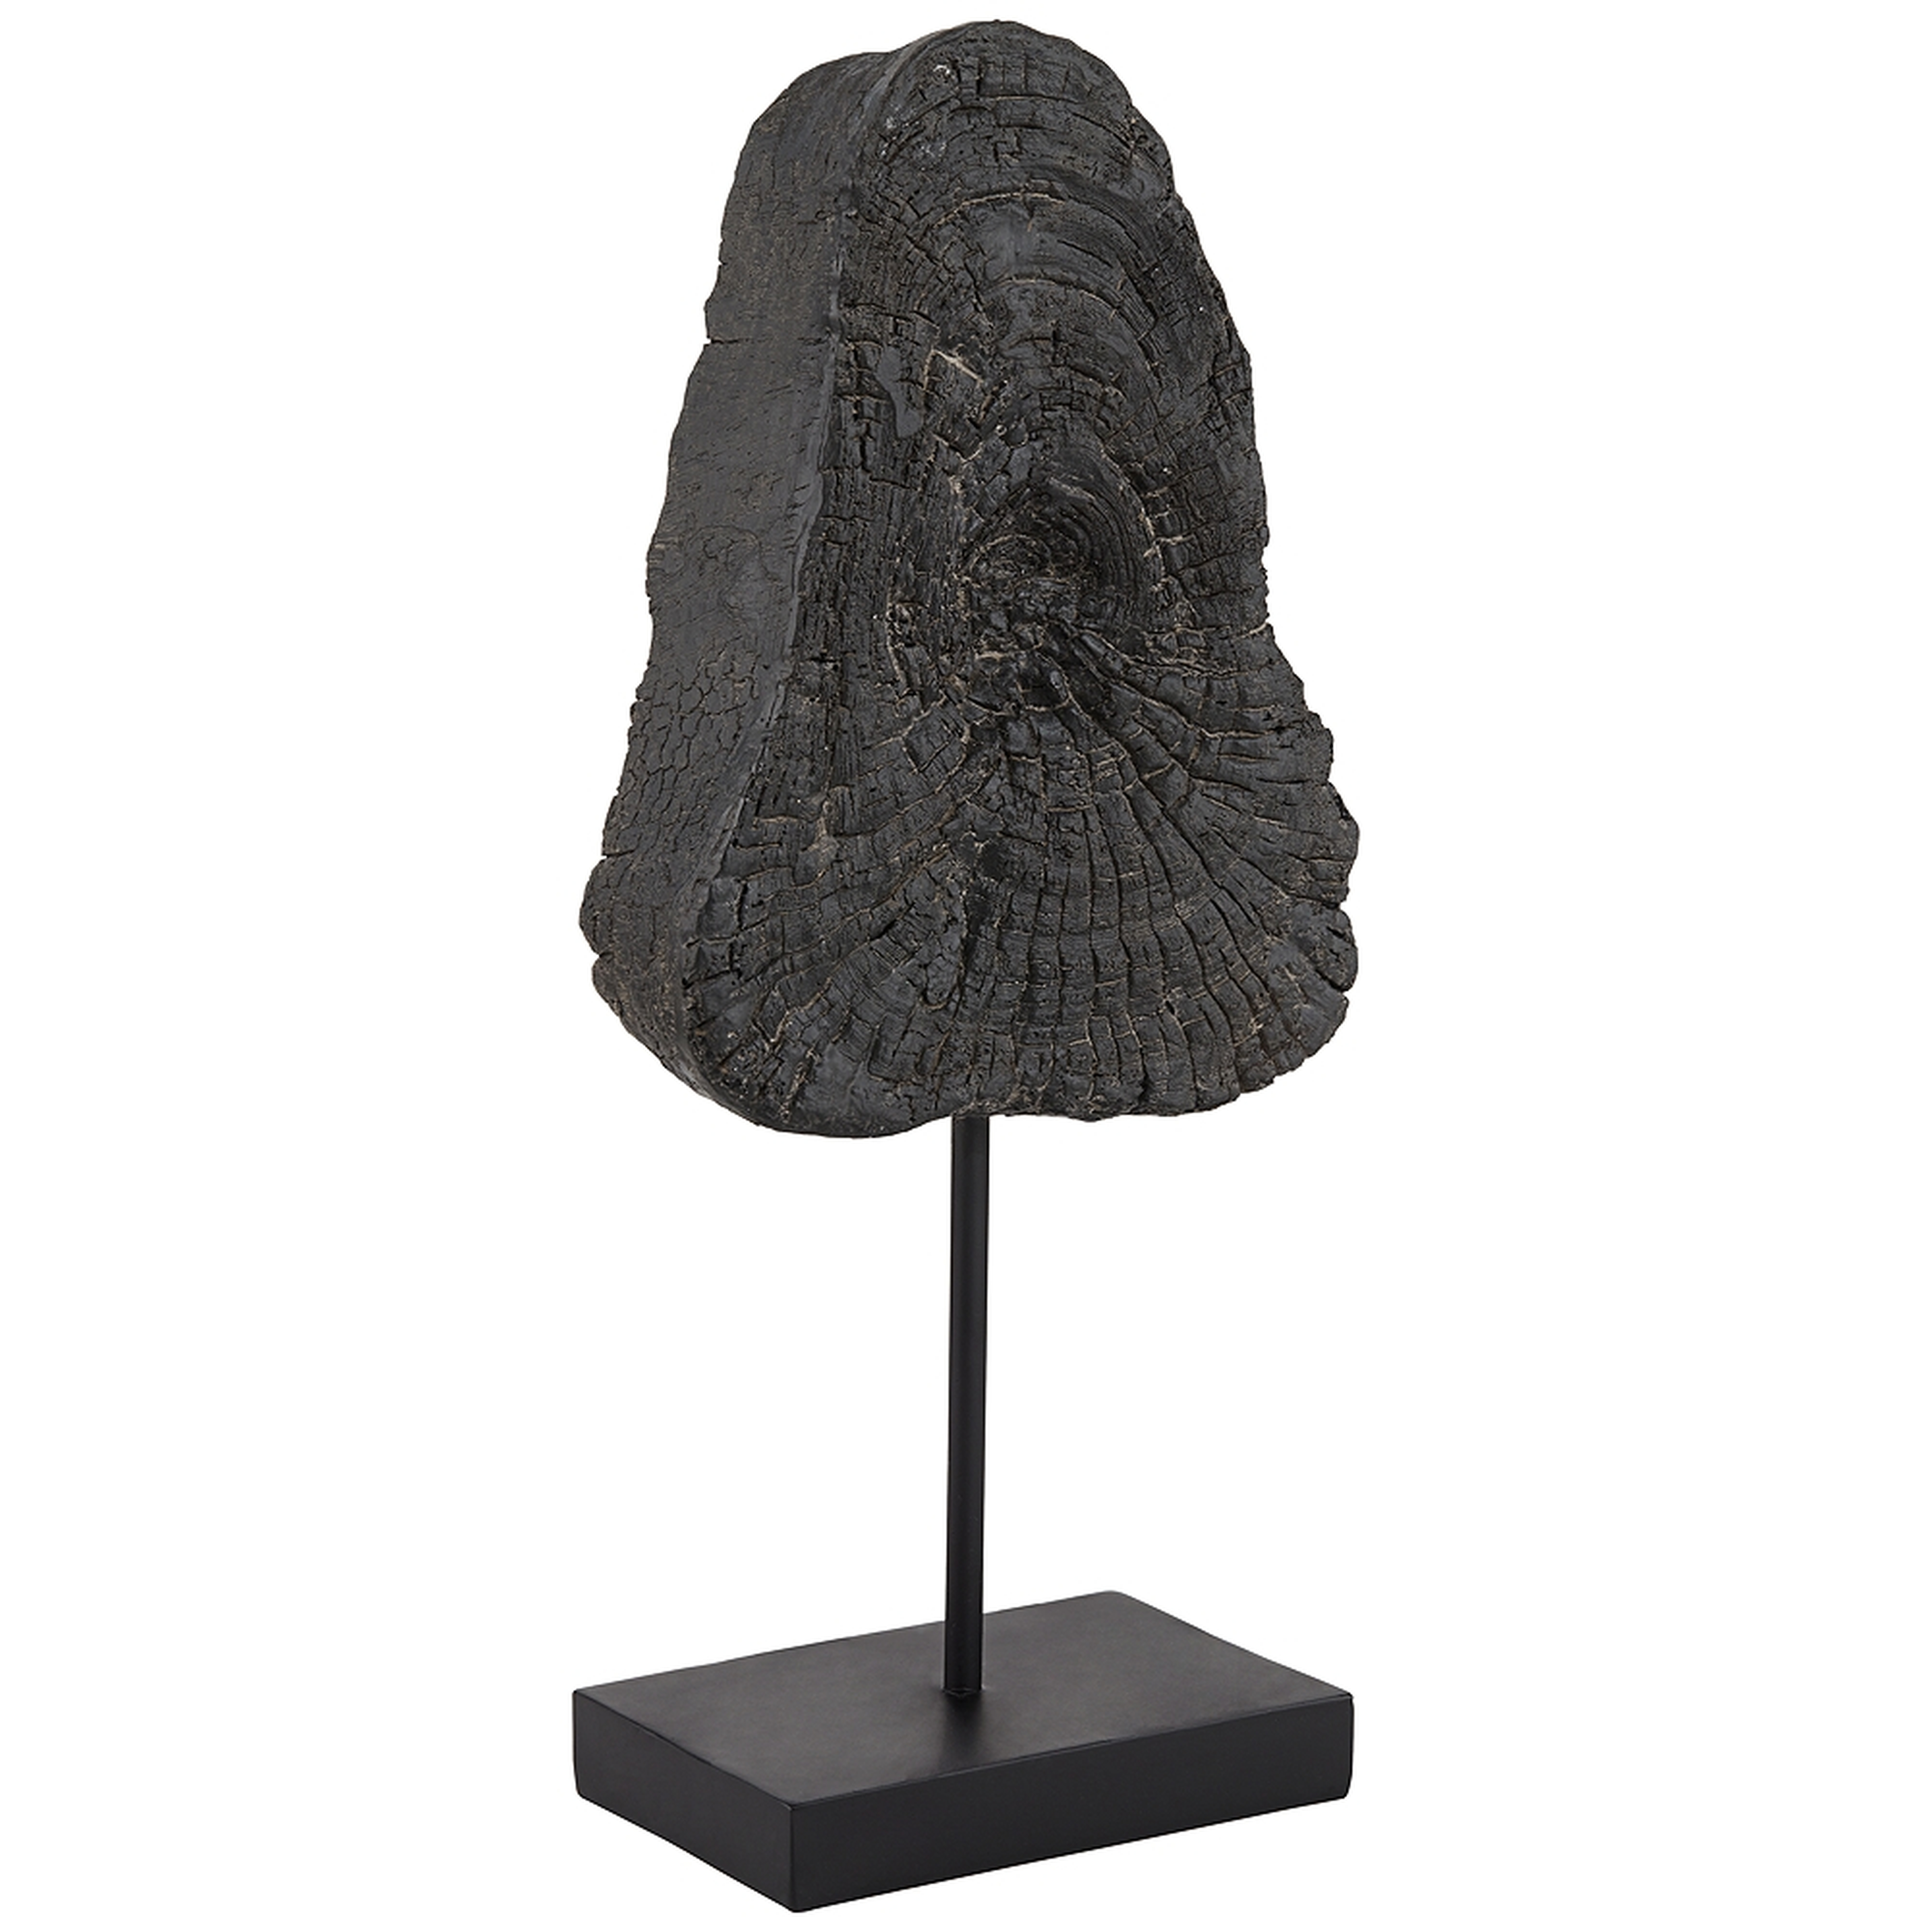 Charcoal Wood Piece 18 3/4" High Black Finish Decorative Sculpture - Style # 90M33 - Lamps Plus